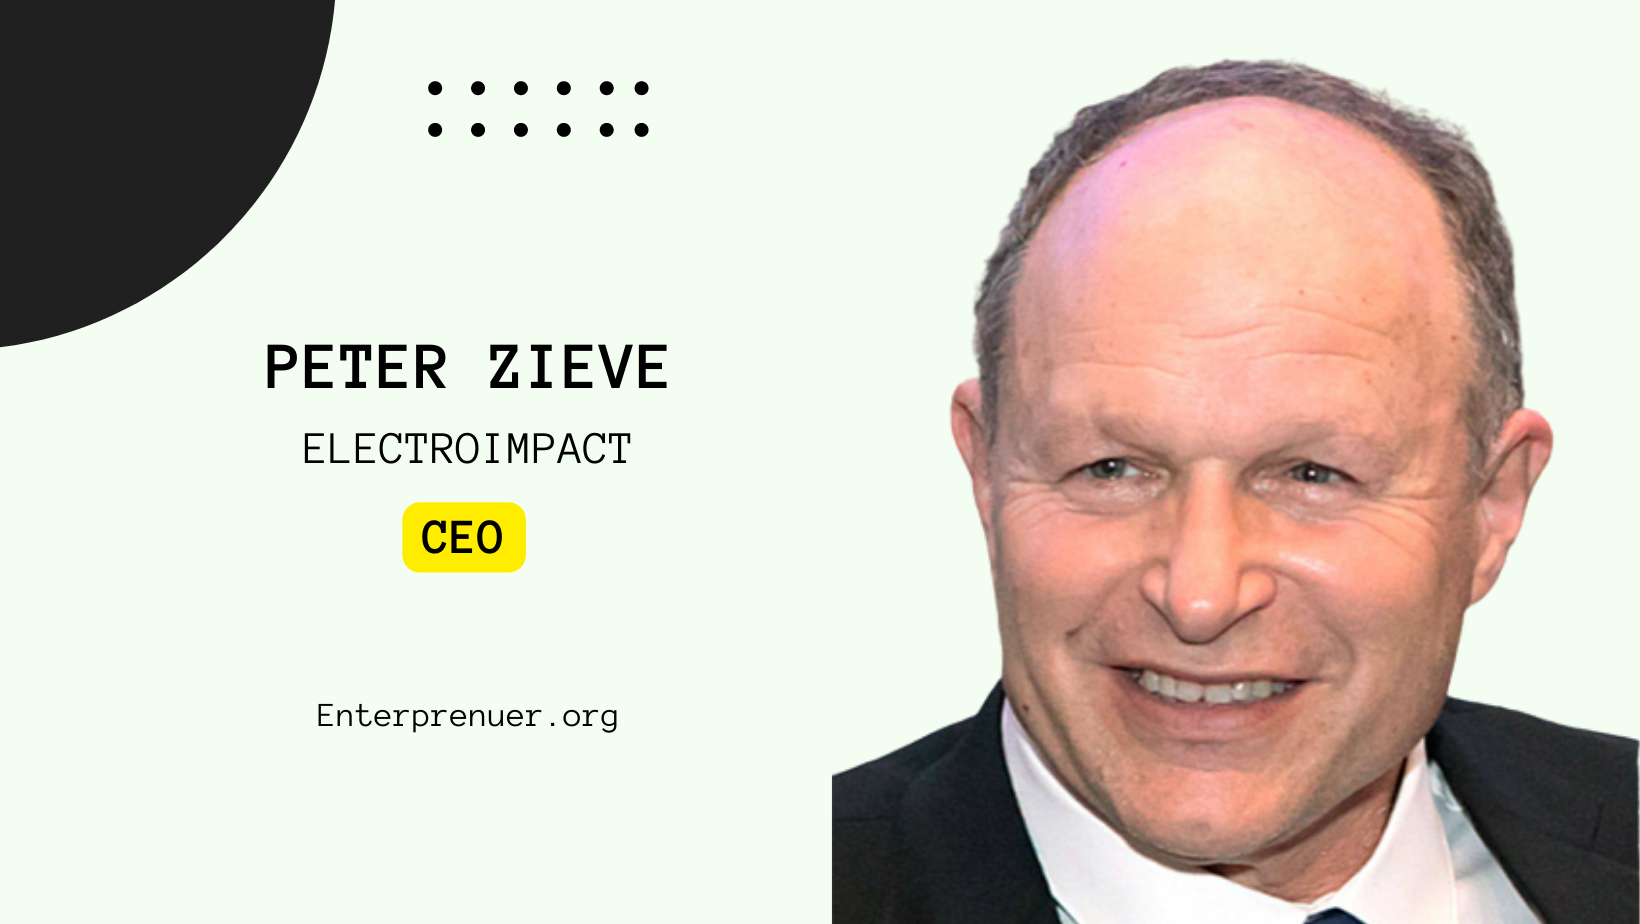 Peter Zieve CEO of Electroimpact